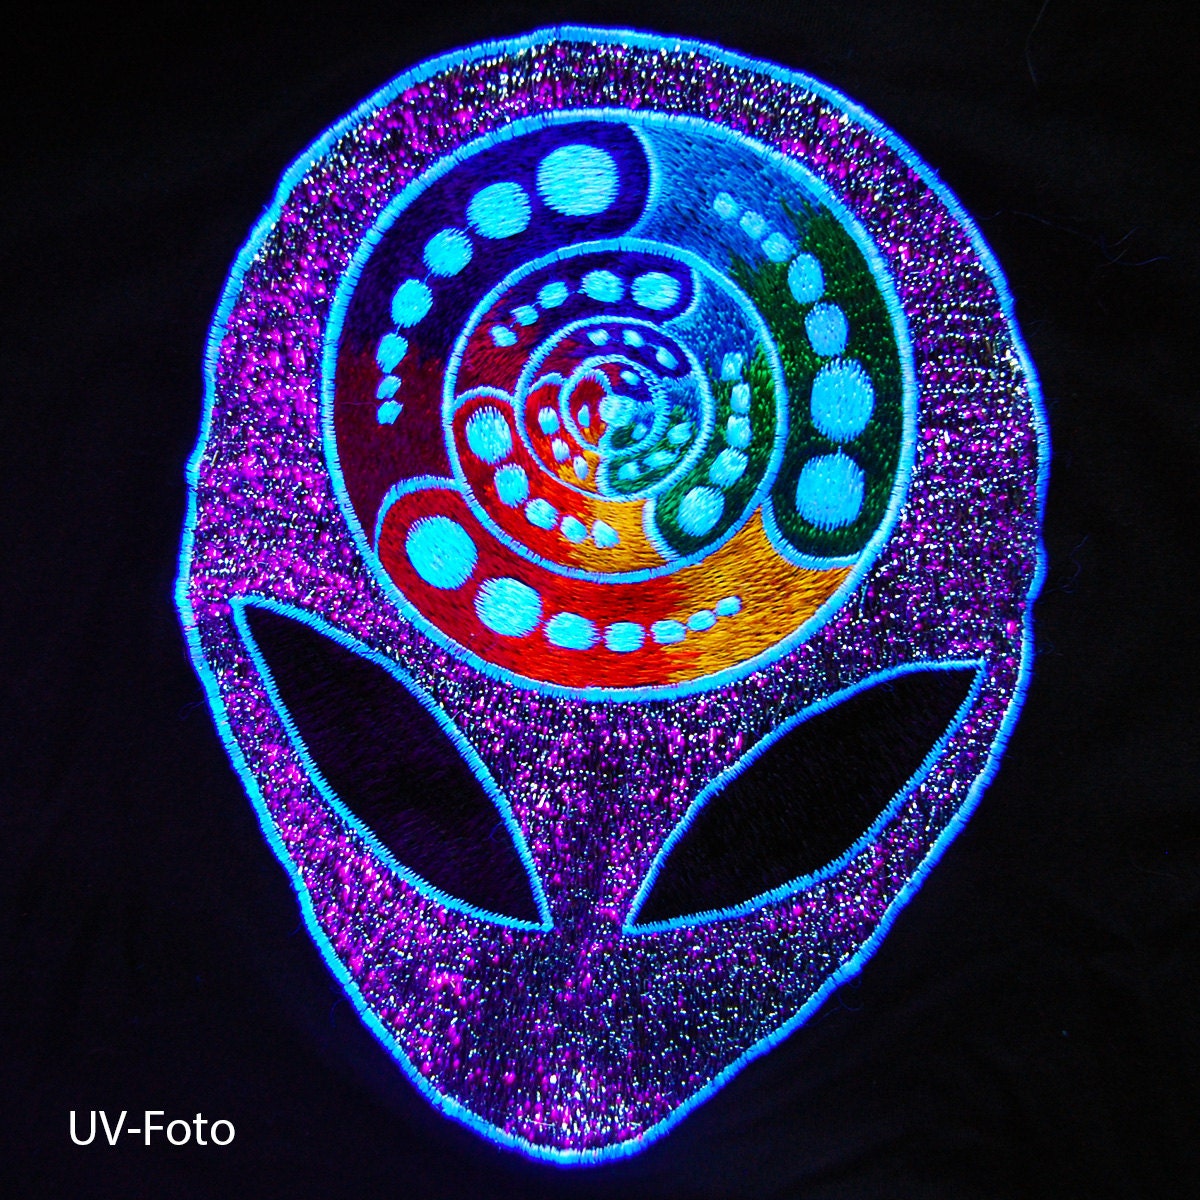 Alien Attributes crop circle T-Shirt blacklight handmade embroidery no print goa t-shirt